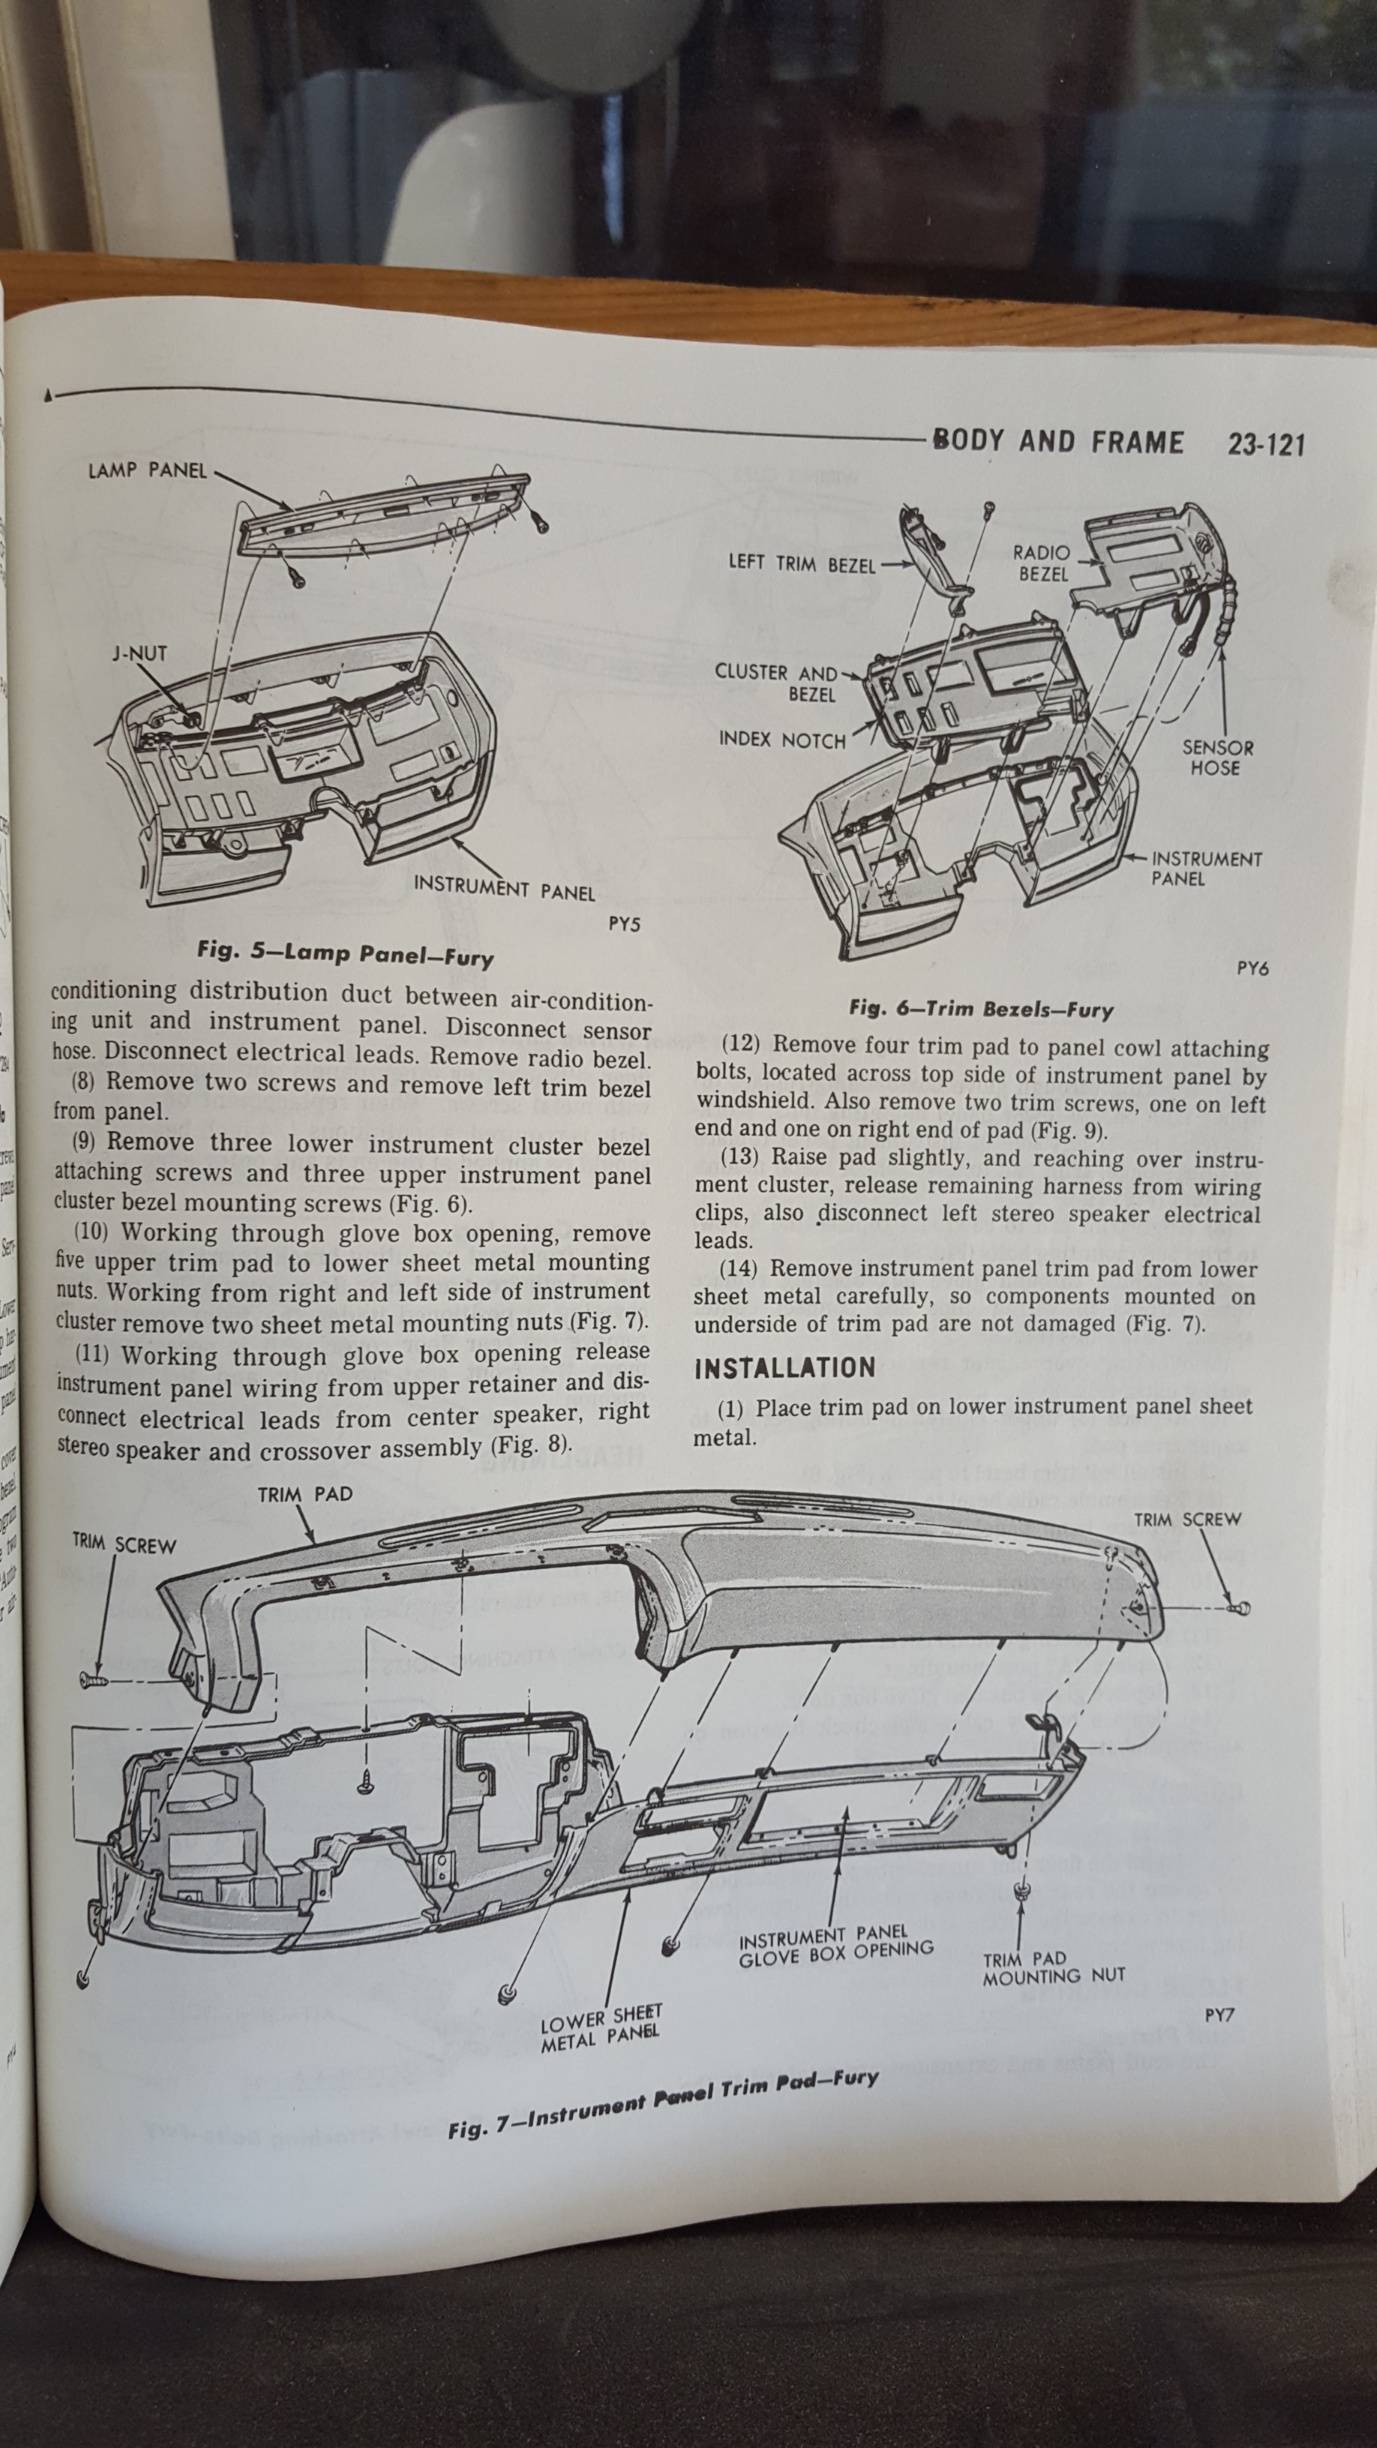 1970 Manual Page 23_121.jpg